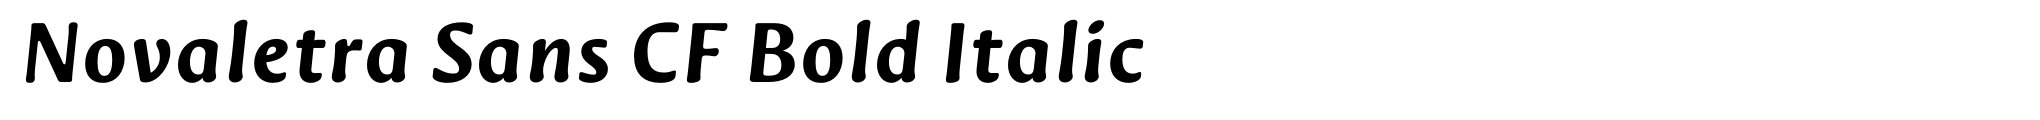 Novaletra Sans CF Bold Italic image